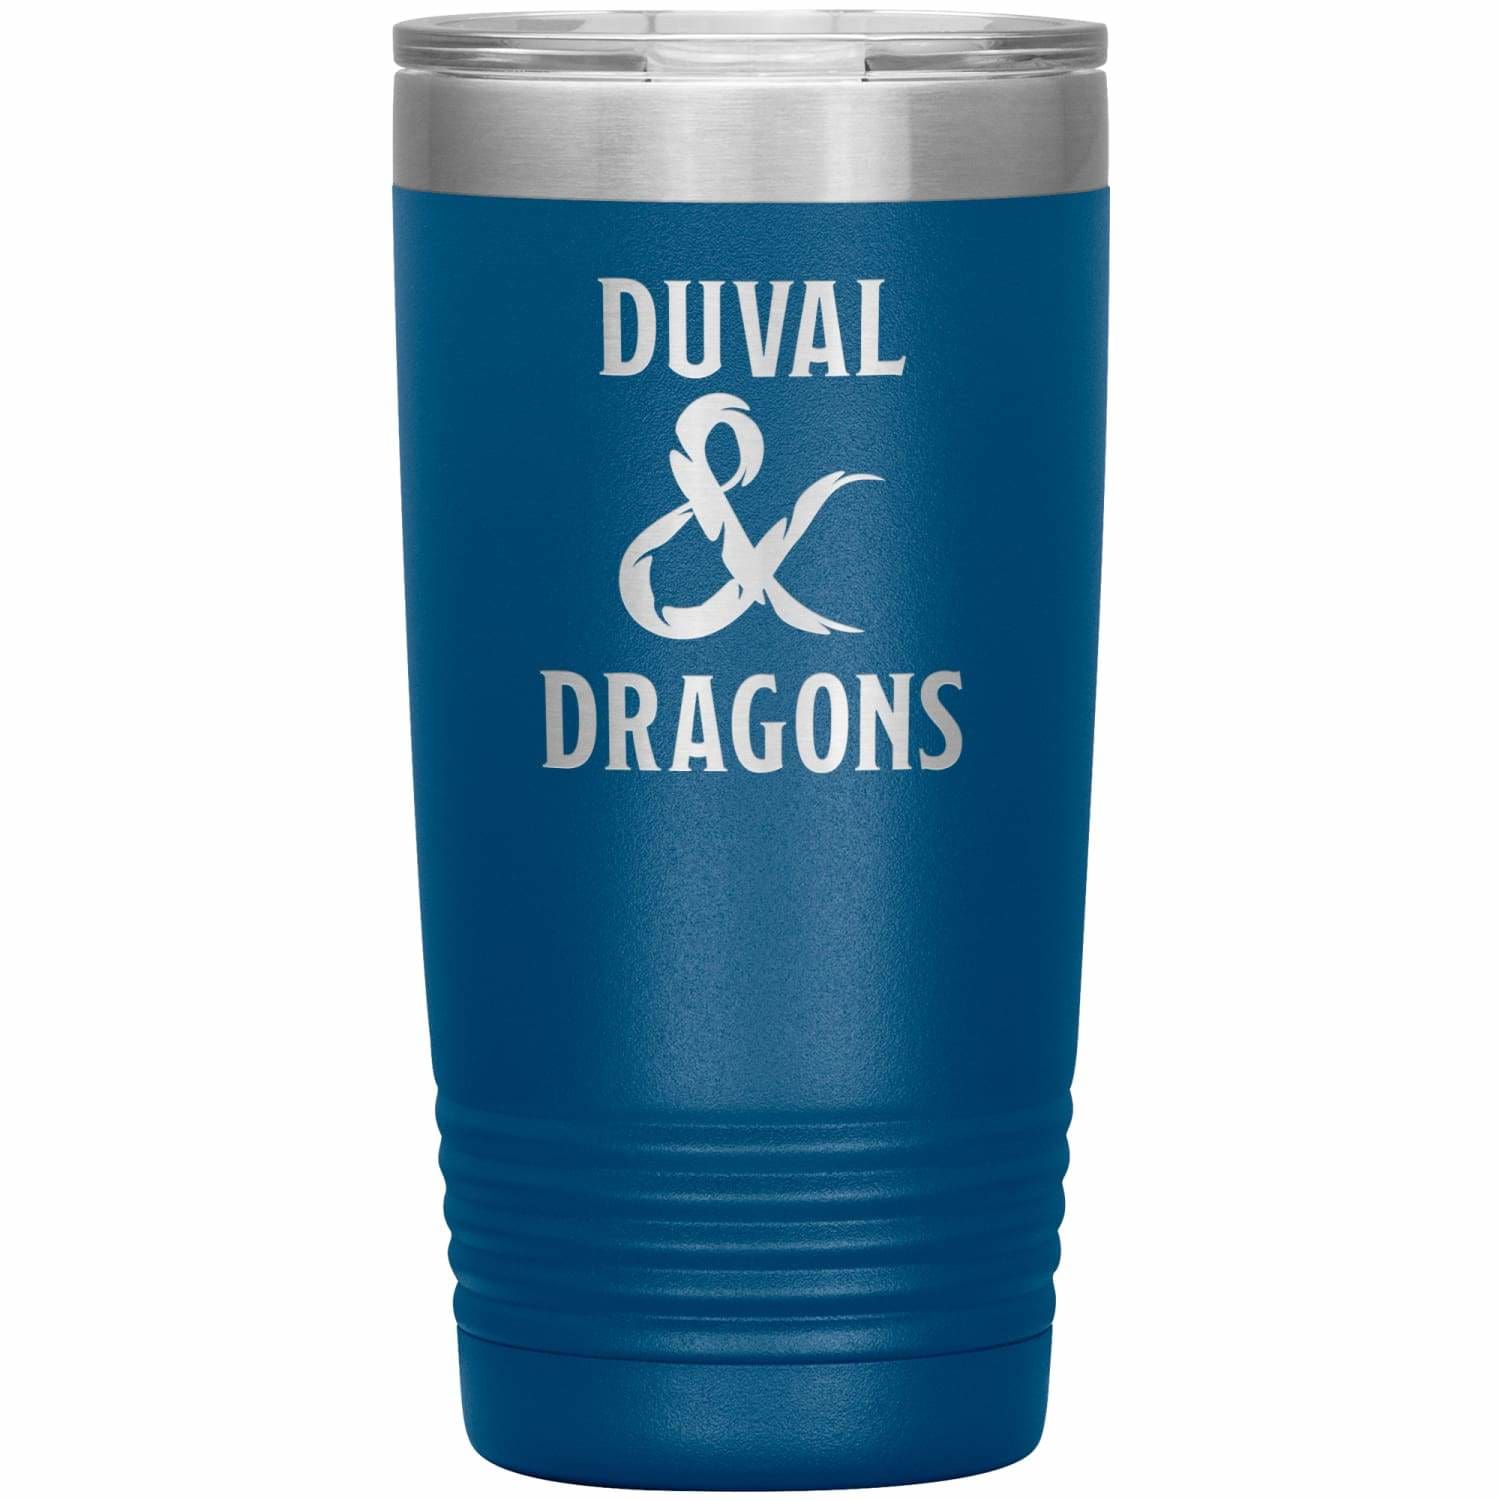 Duval & Dragons Logo 20oz Vacuum Tumbler - Blue - Tumblers